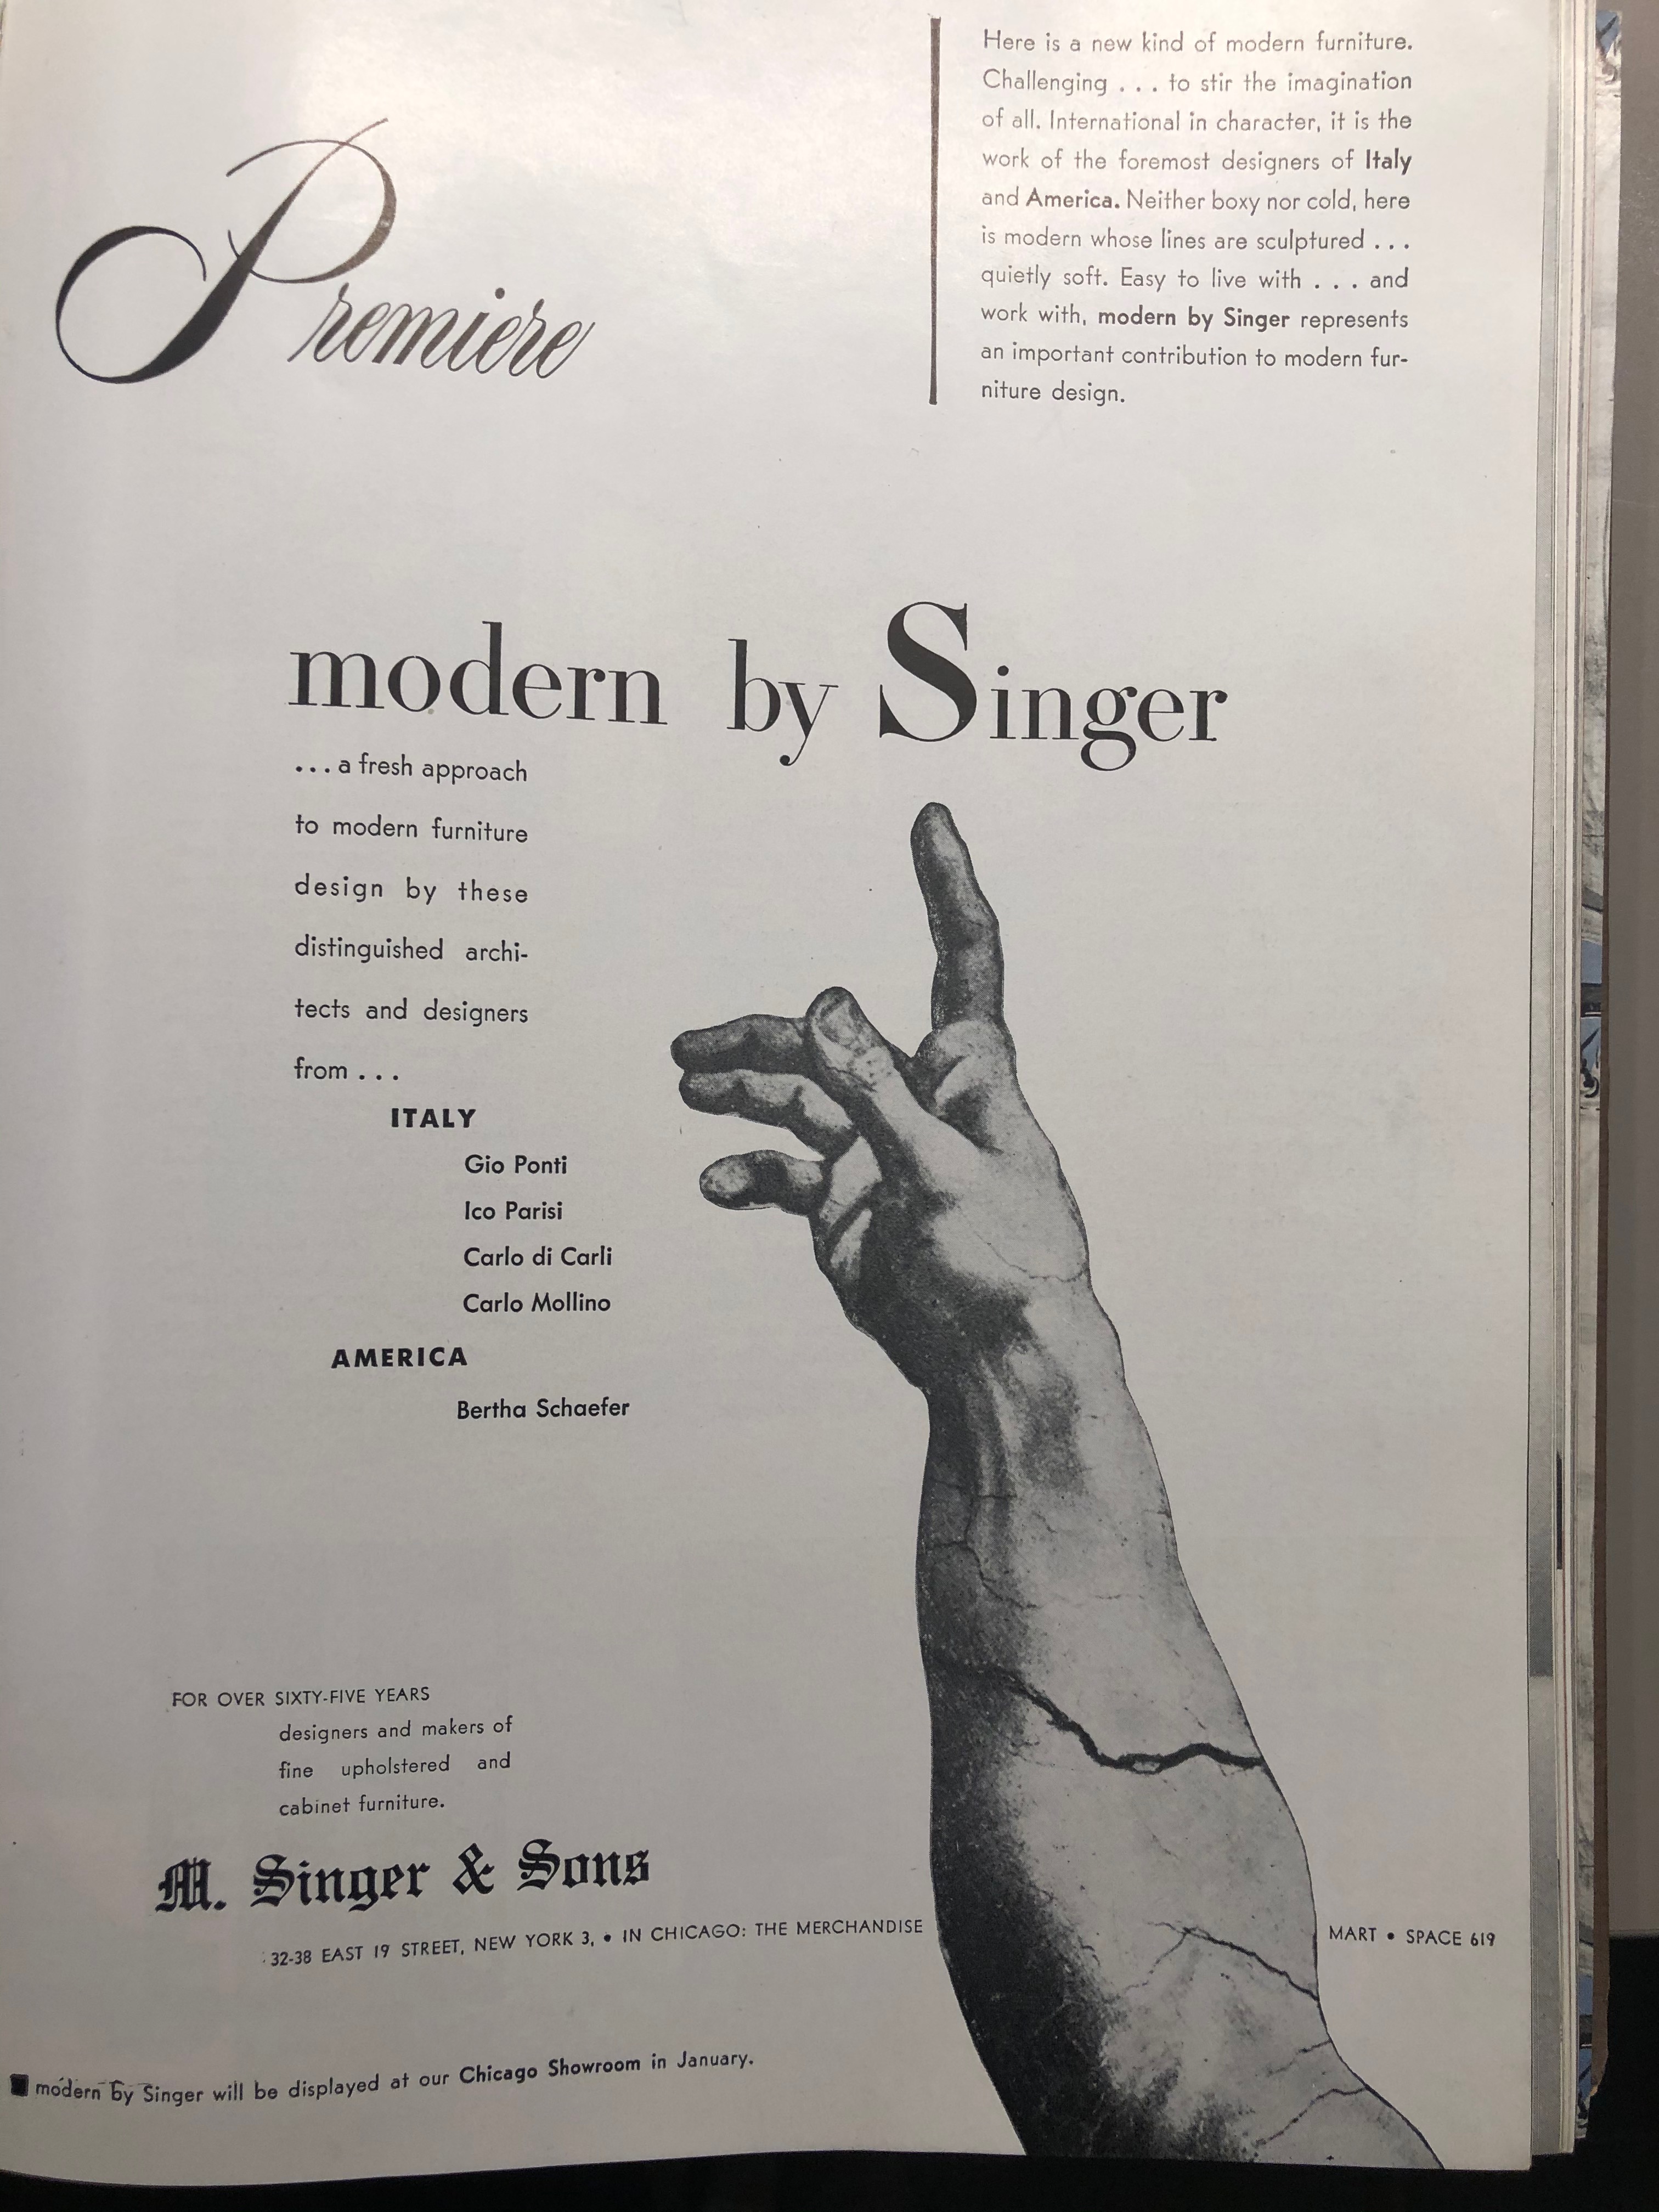 Premiere, November 1951